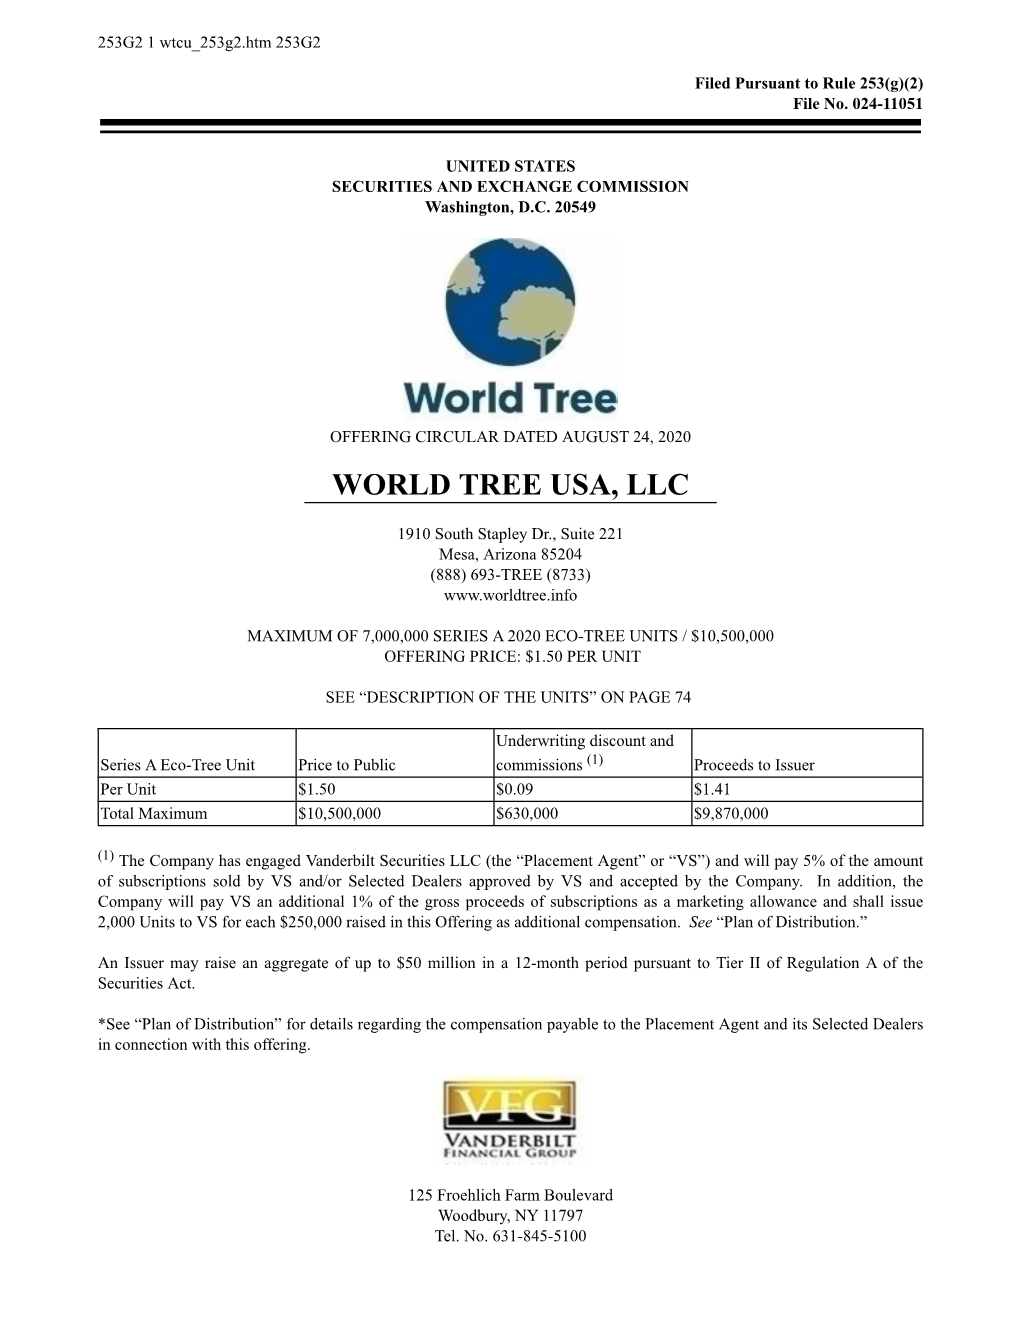 World Tree Usa, Llc